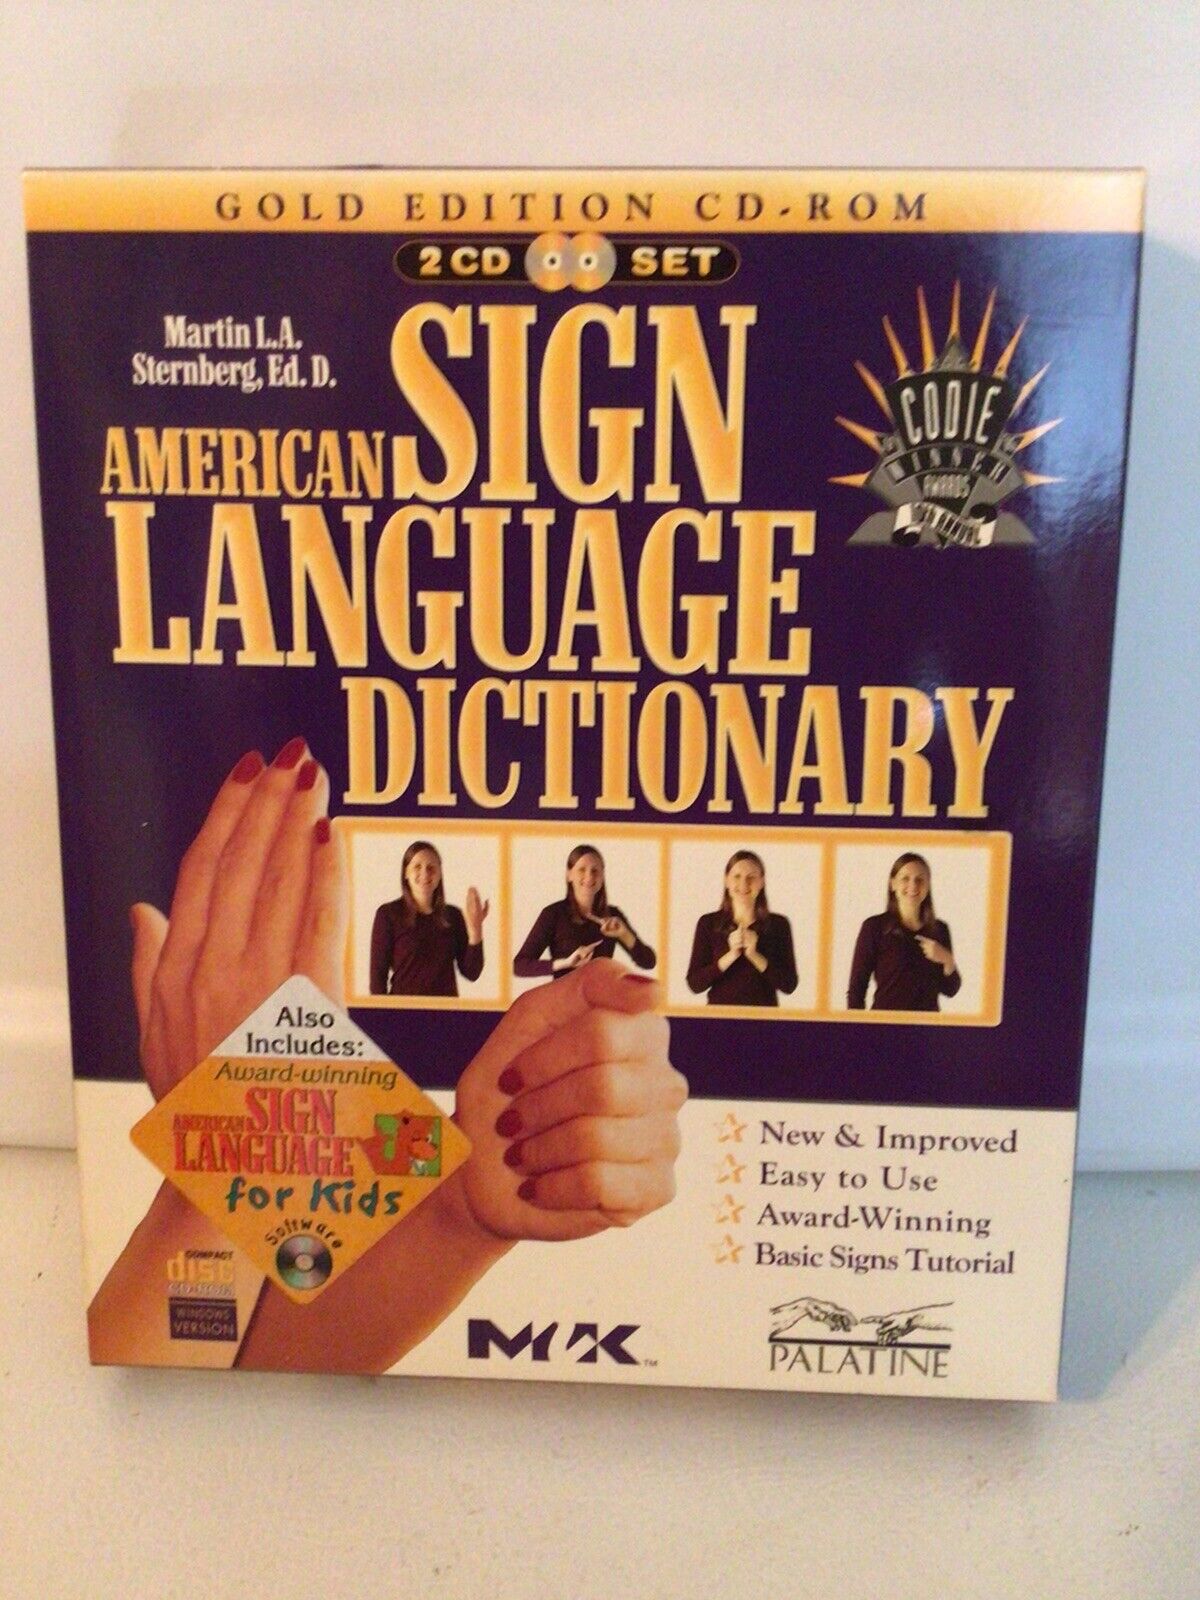 AMERICAN SIGN LANGUAGE DICTIONARY GOLD EDITION PC CD-Rom 2CD SET + BONUS KIDS CD